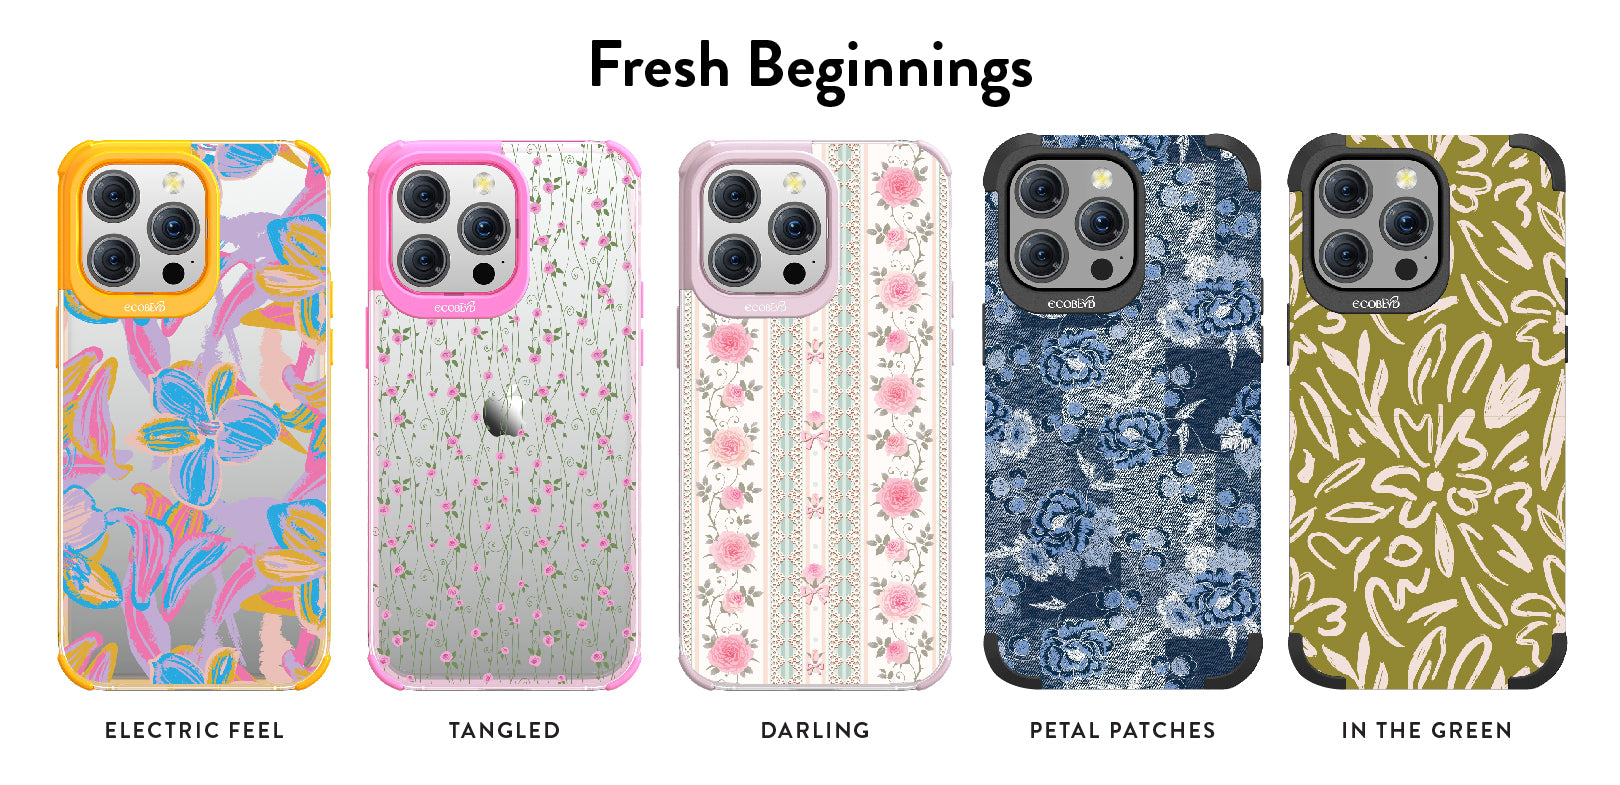 Fresh Beginnings - Cute Spring Designs On Eco-Friendly Phone Cases